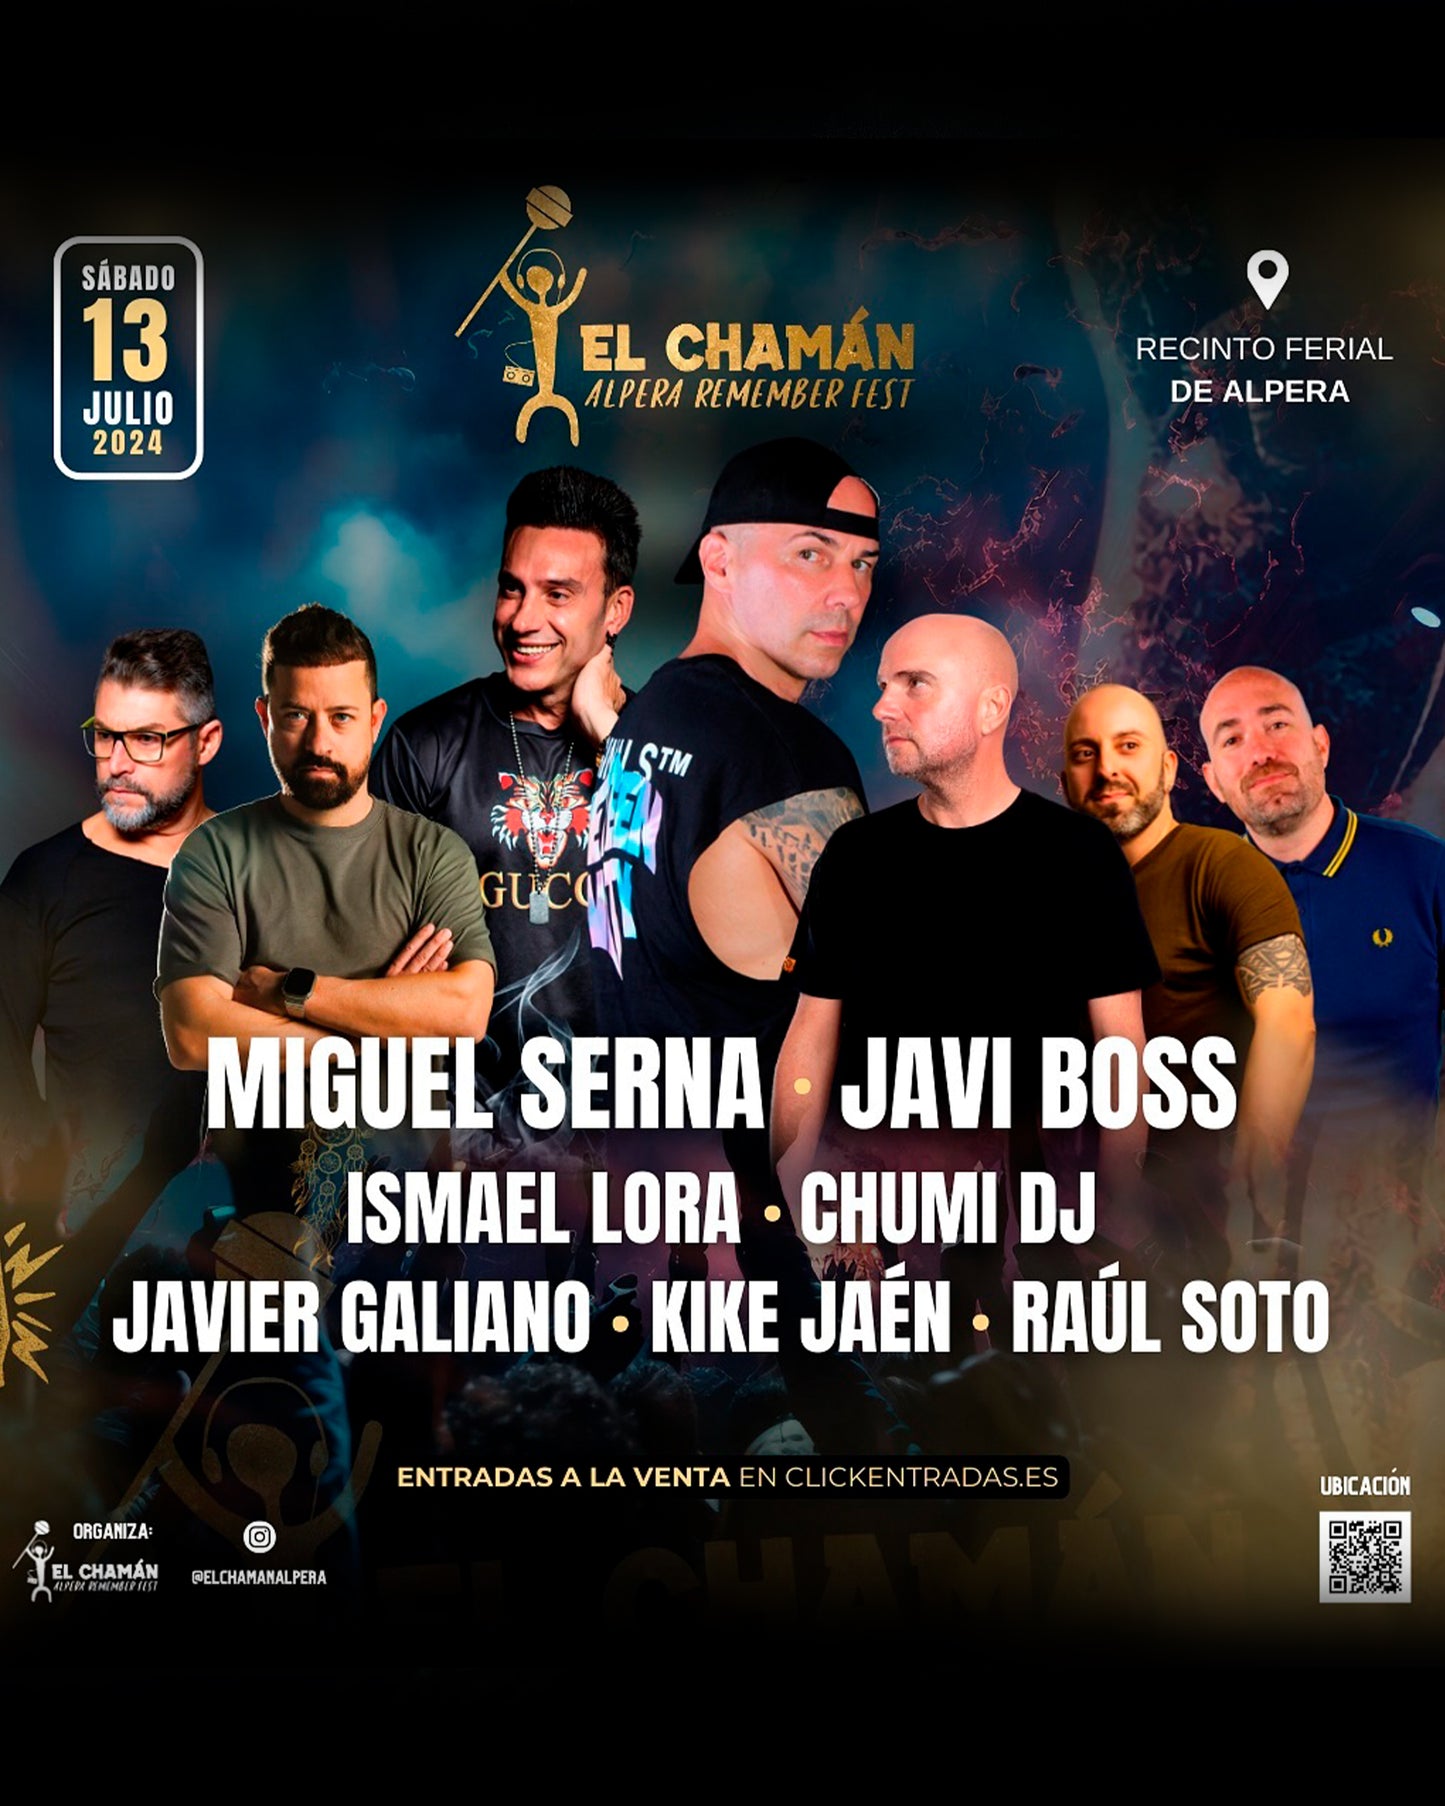 El Chaman Alpera Remeber Fest